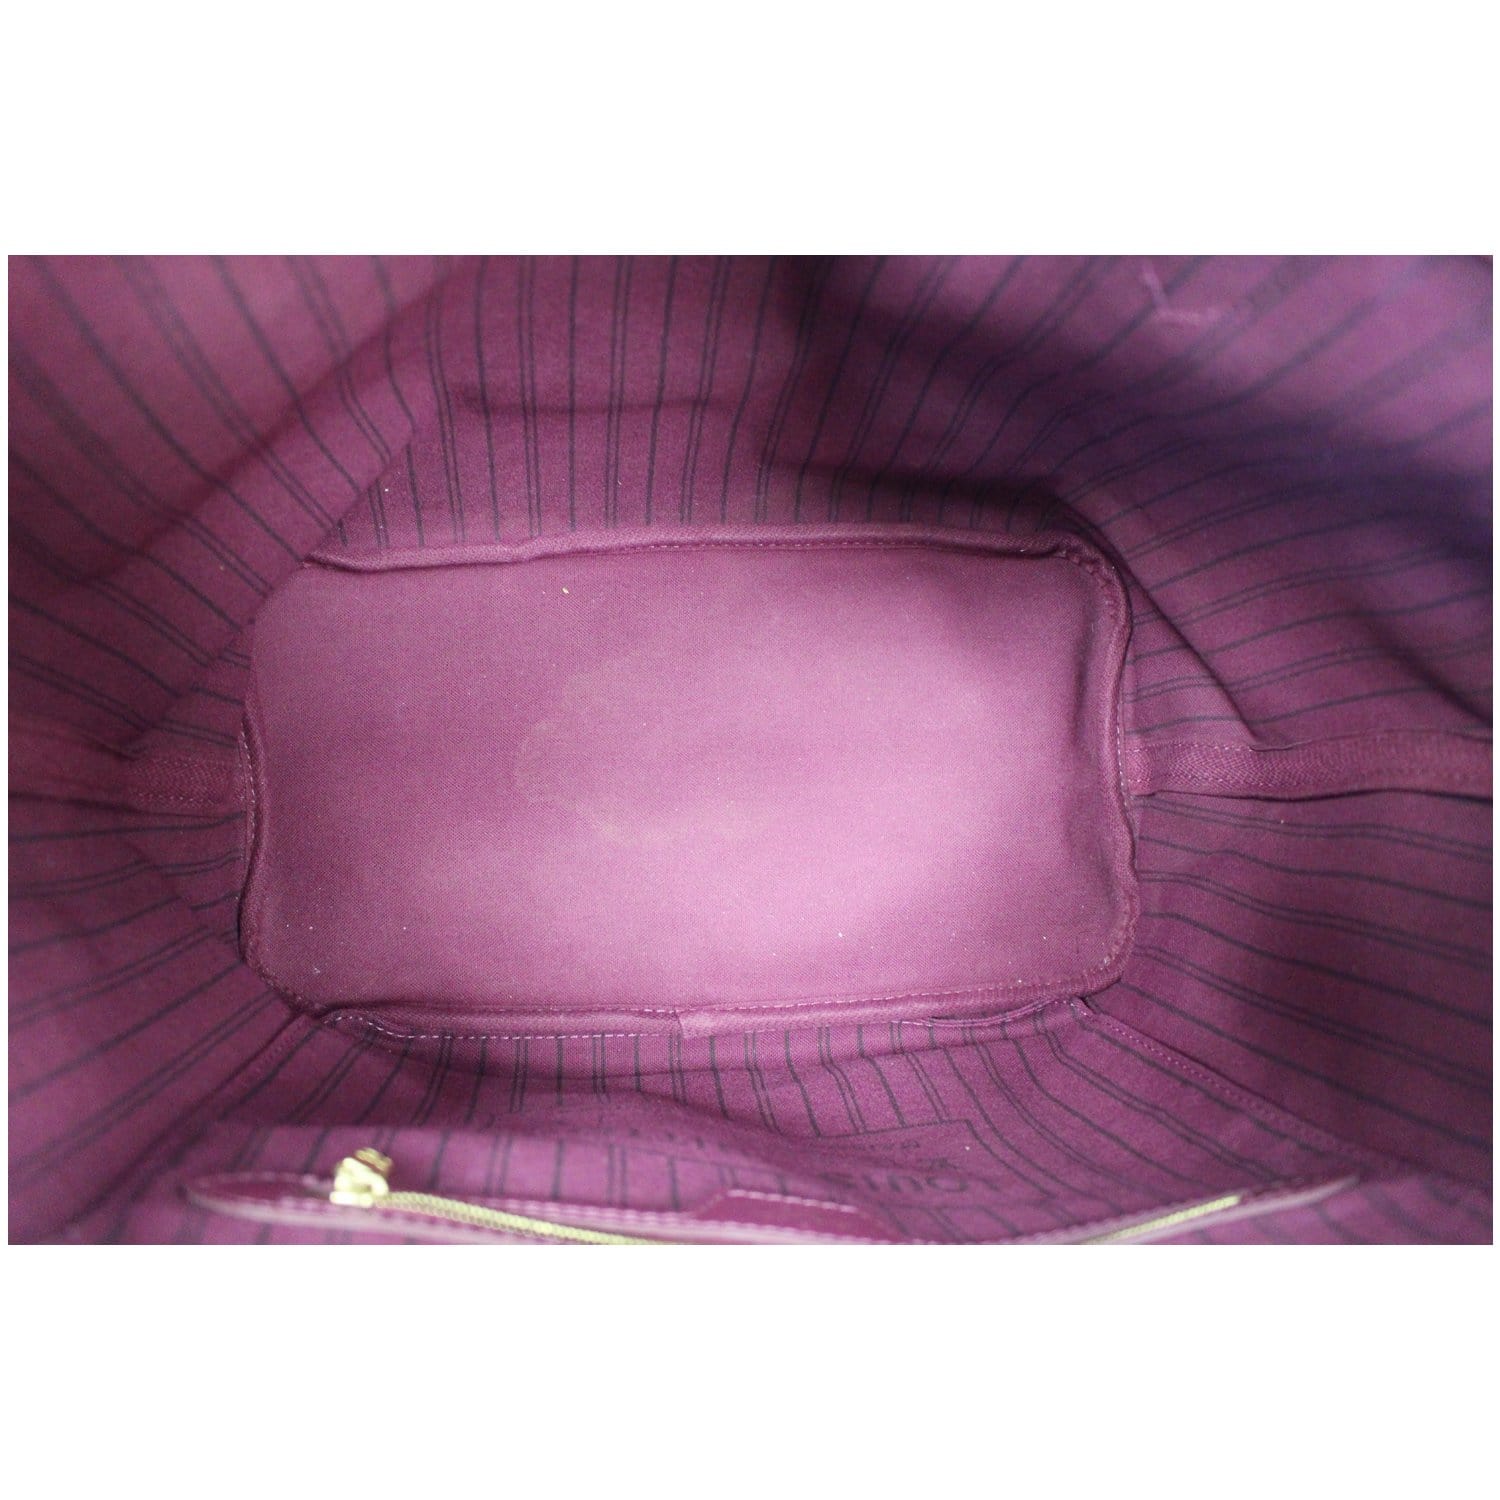 Authentic LOUIS VUITTON Neverfull Purple Totem MM Monogram Tote Bag Purse  #51034